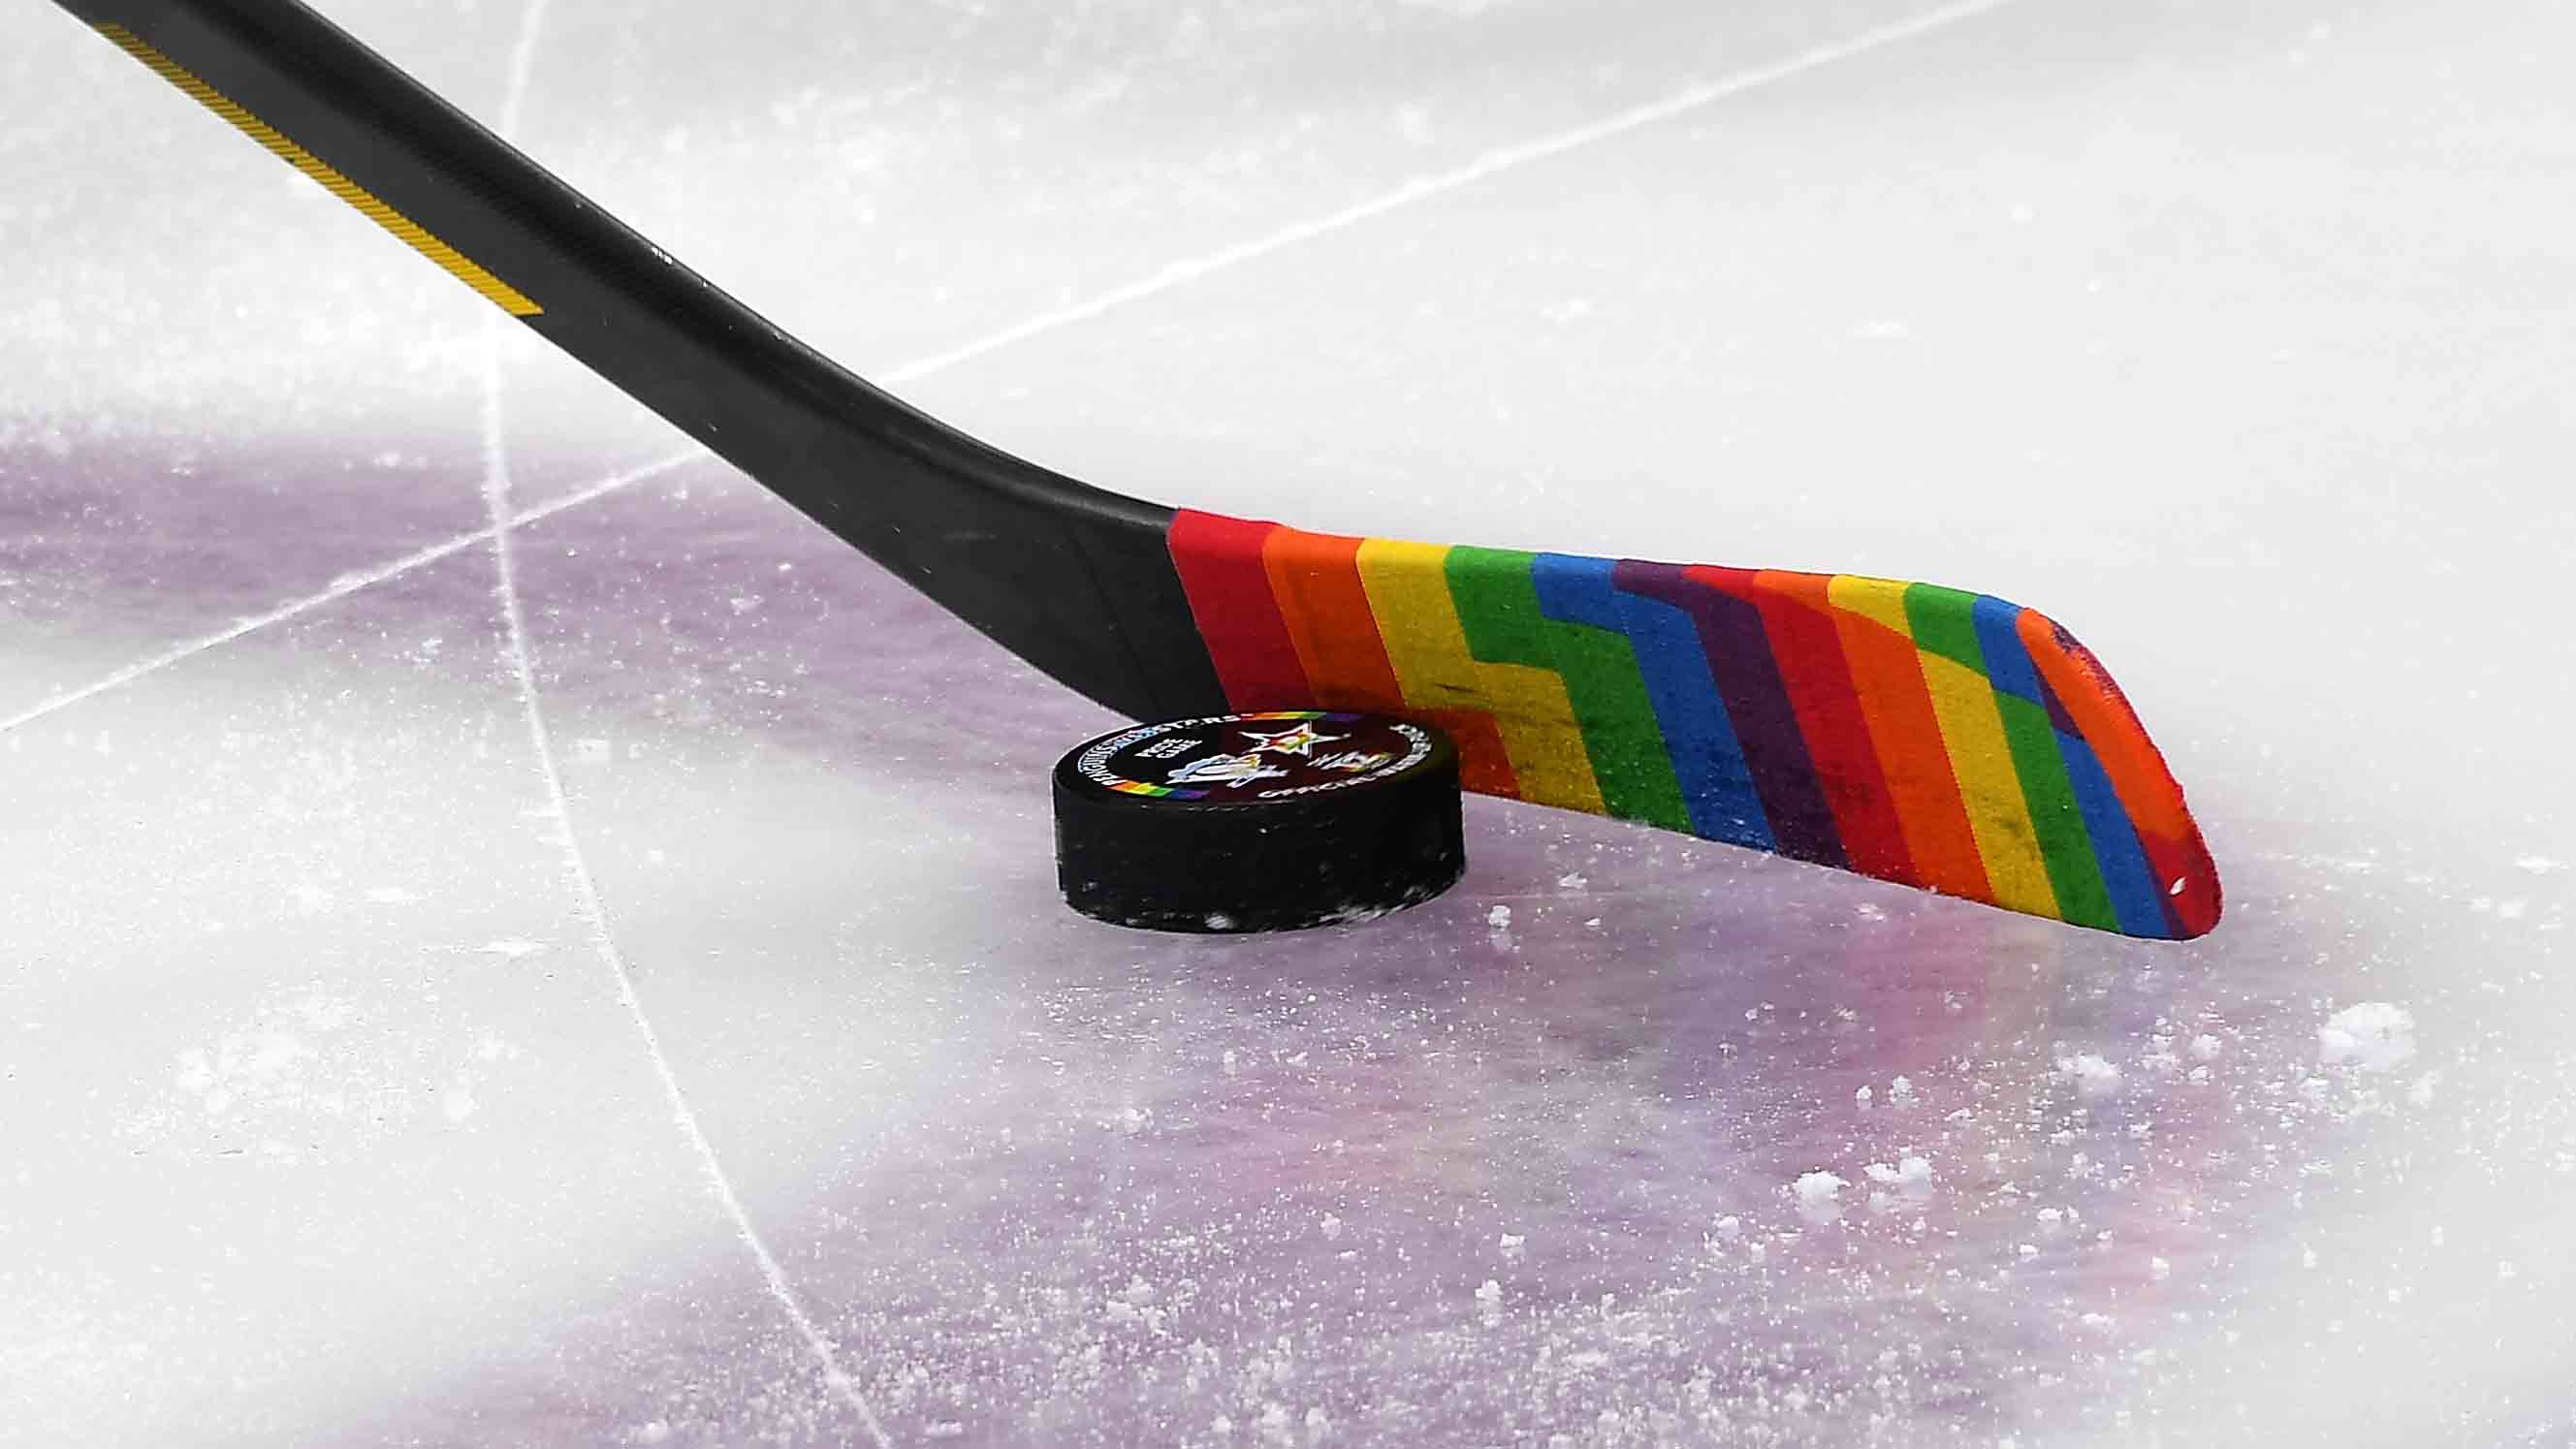 Report: Blackhawks will not wear Pride-themed jerseys - NBC Sports